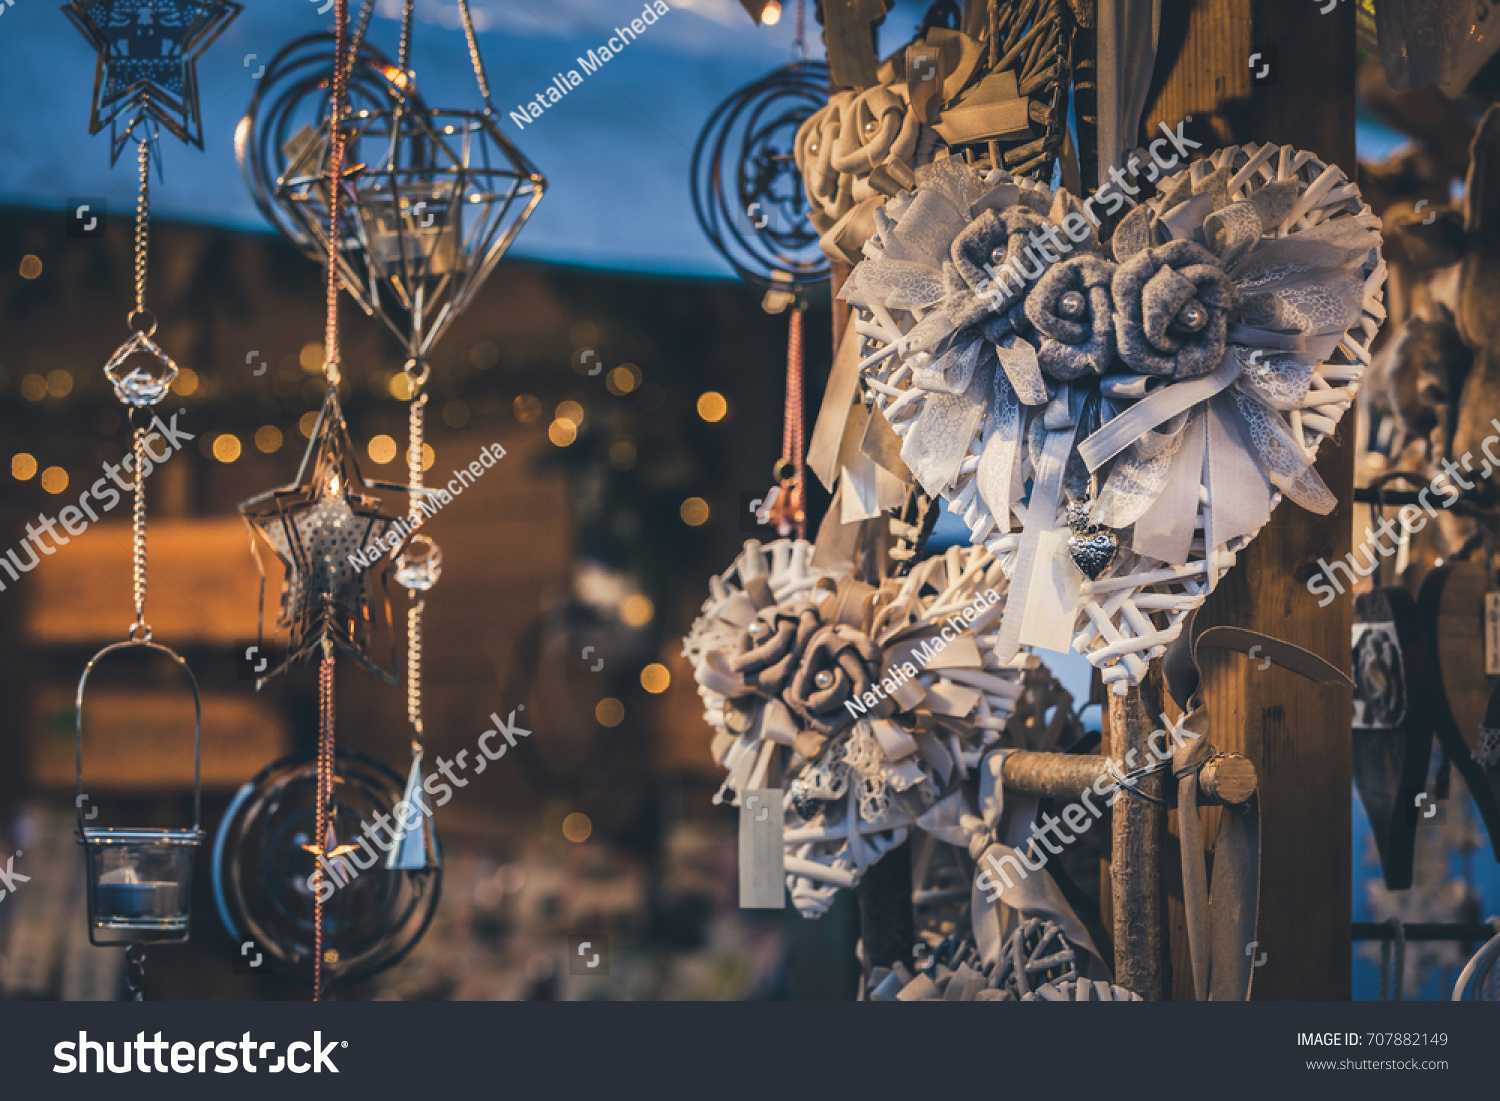 Natale A Trento.Illuminated Christmas Fair Kiosk Handcrafted Xmas The Arts Stock Image 707882149